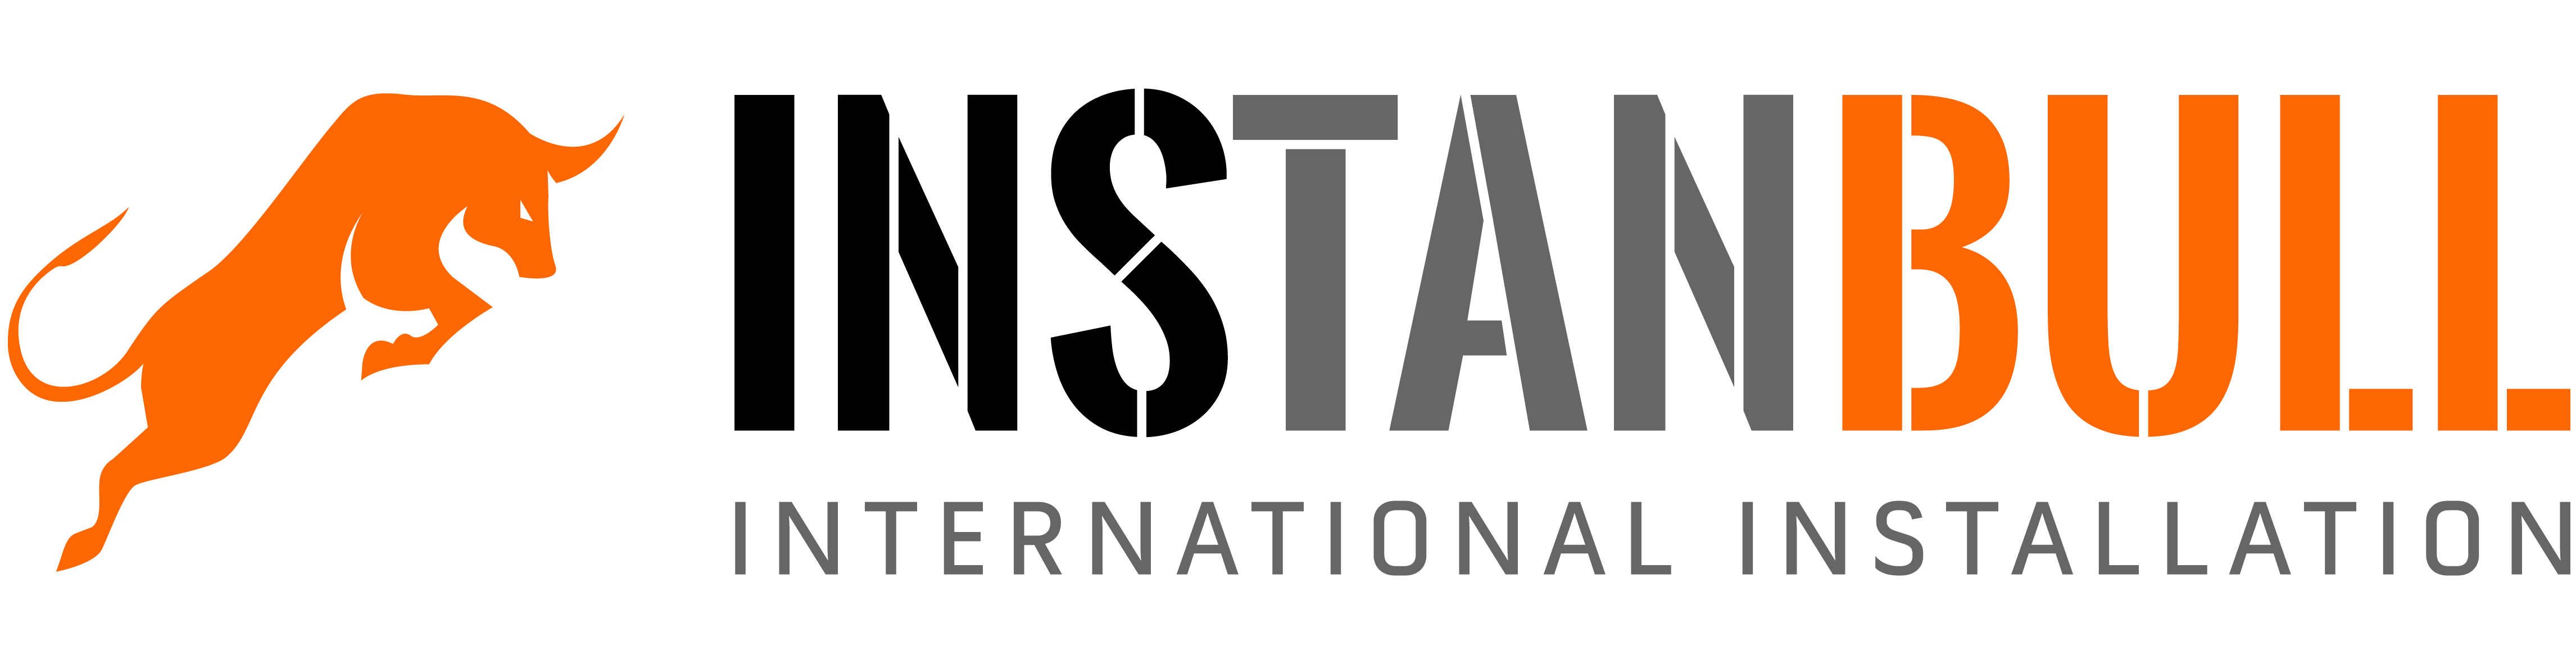 Instanbull Logo